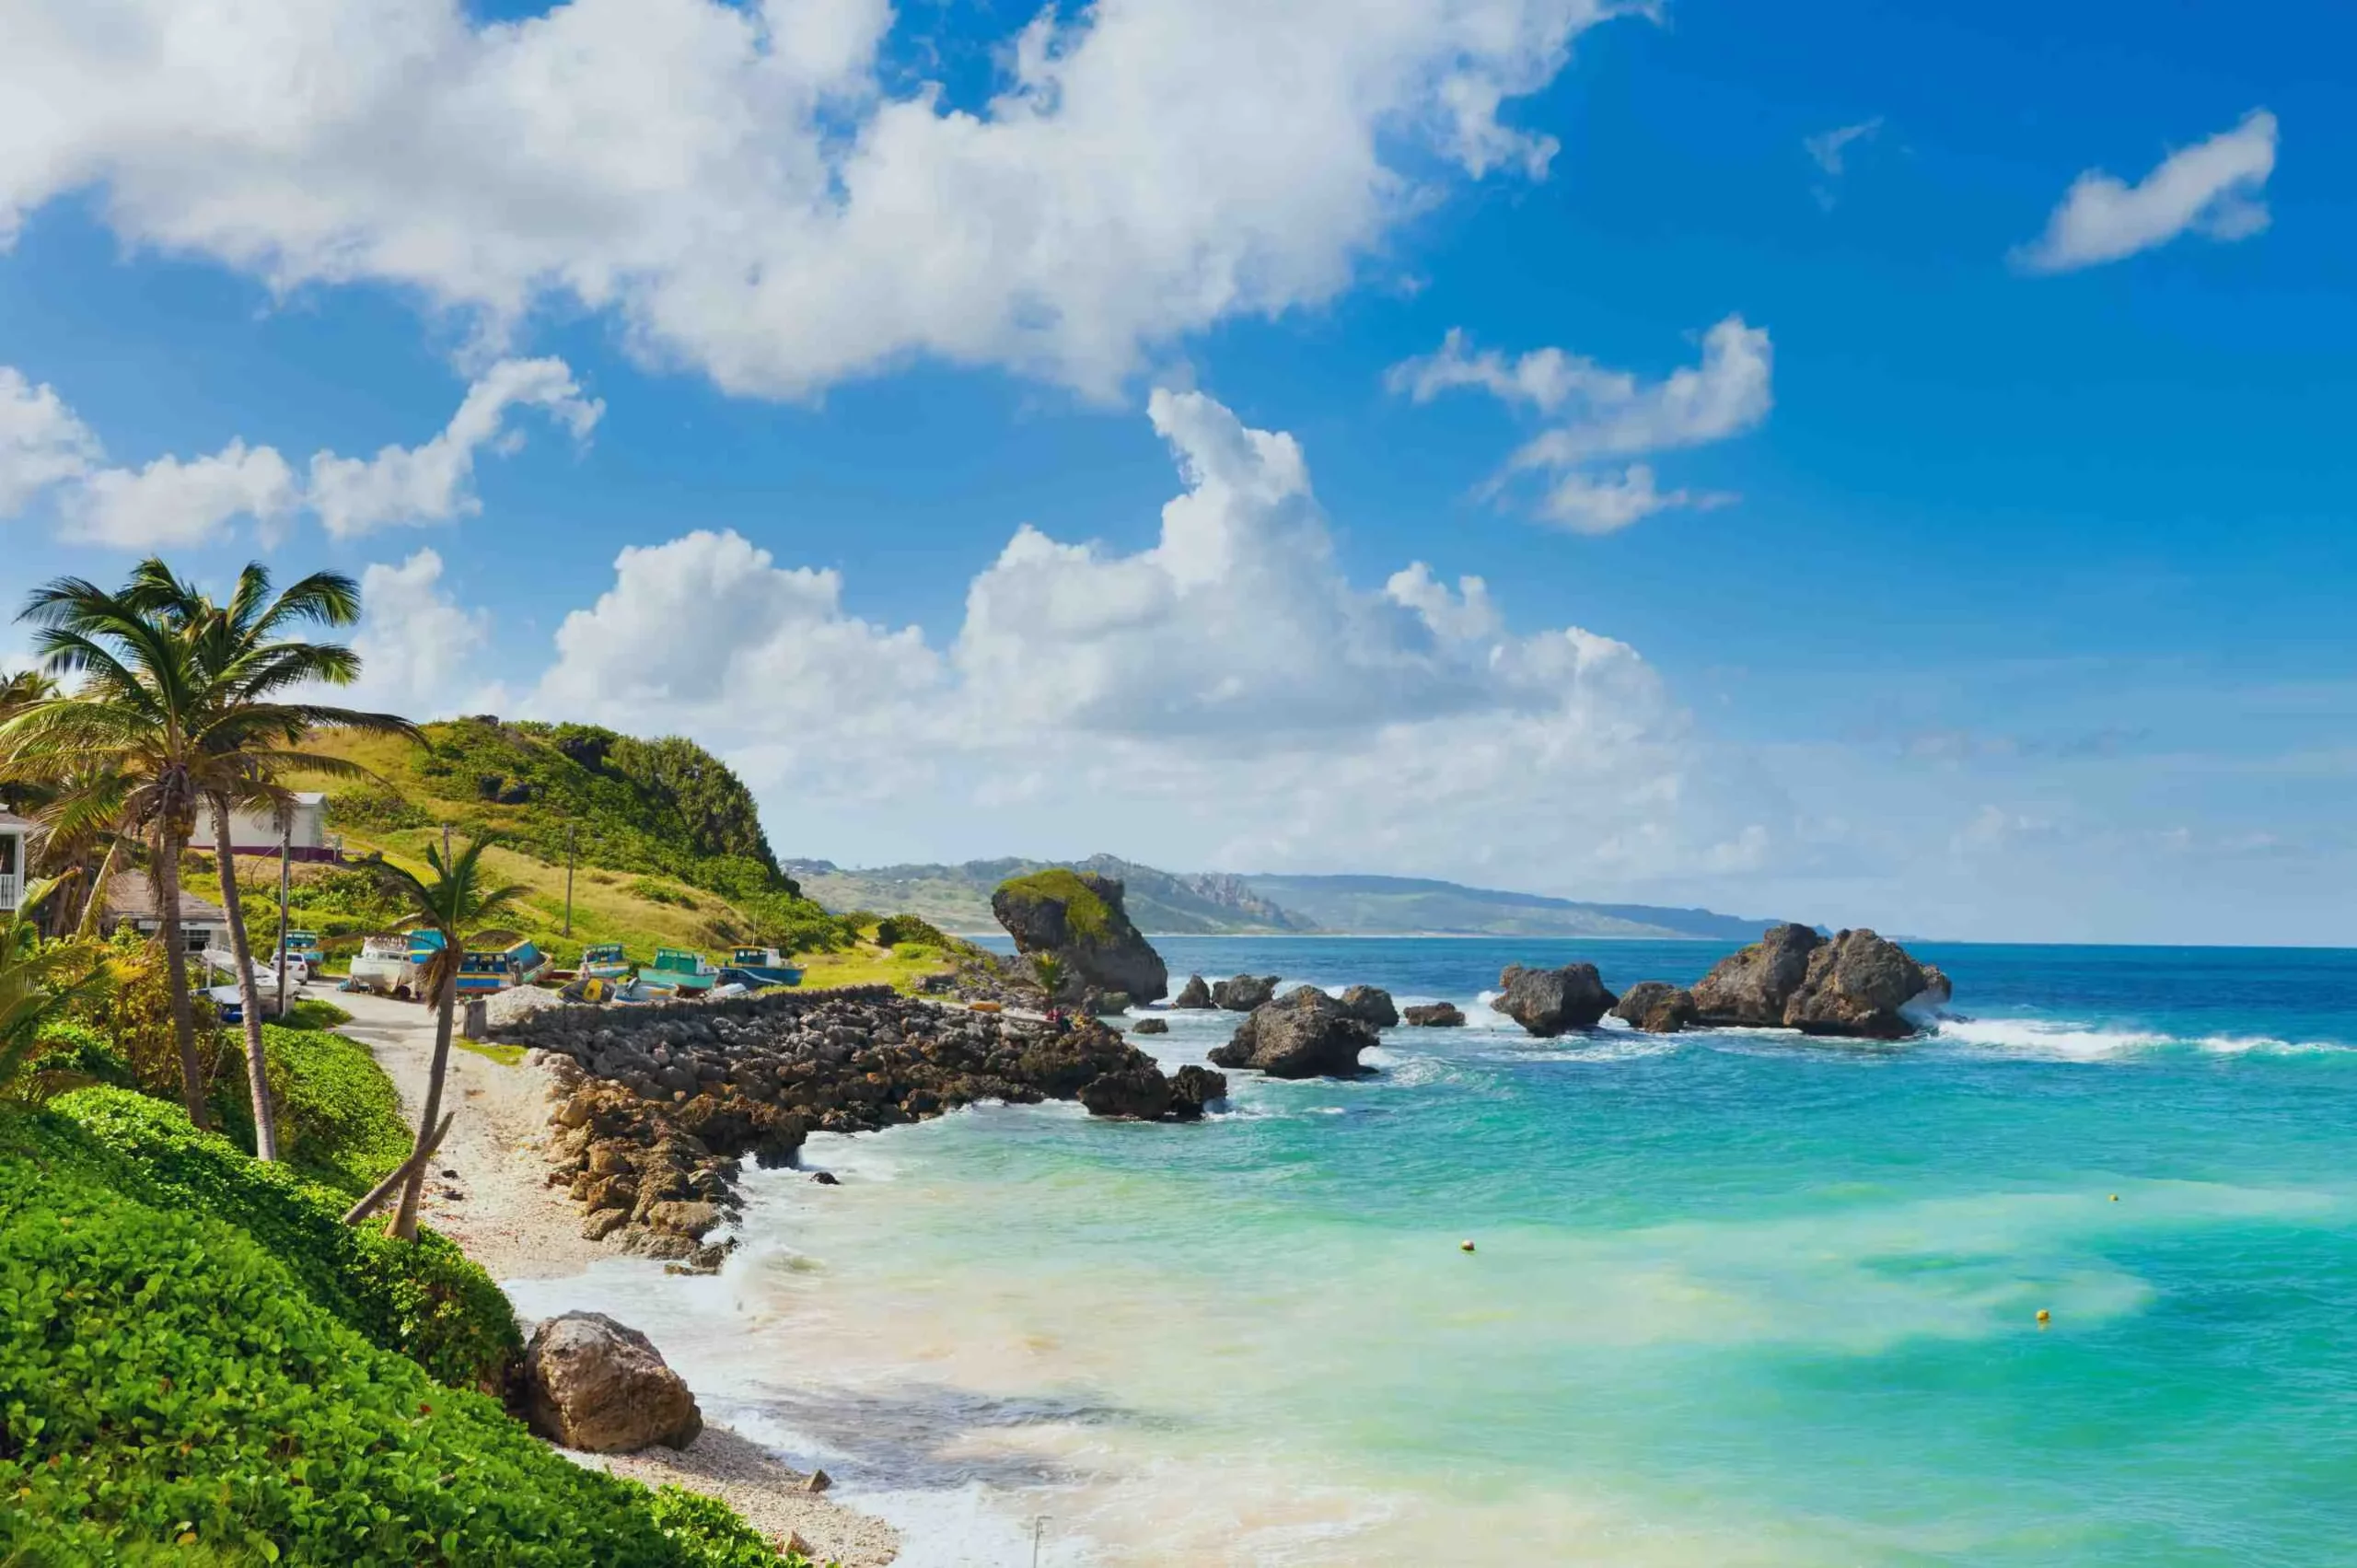 Top 10 Adventure Activities to Experience in Barbados